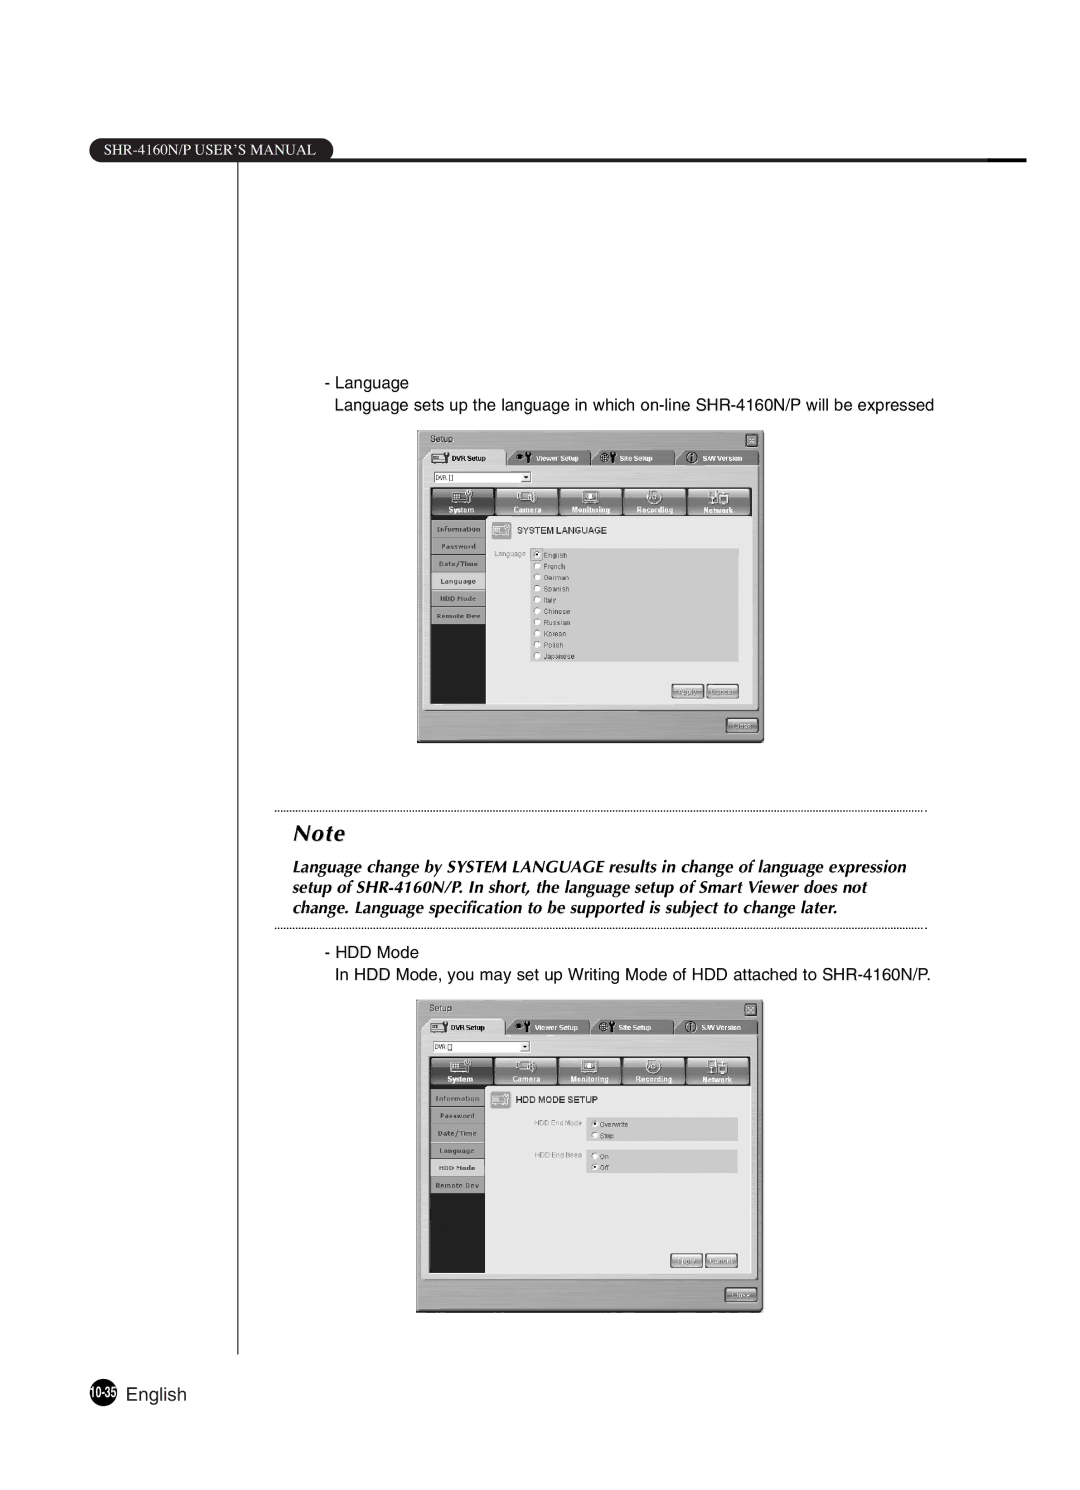 Samsung SHR-4160P manual 10-35English 